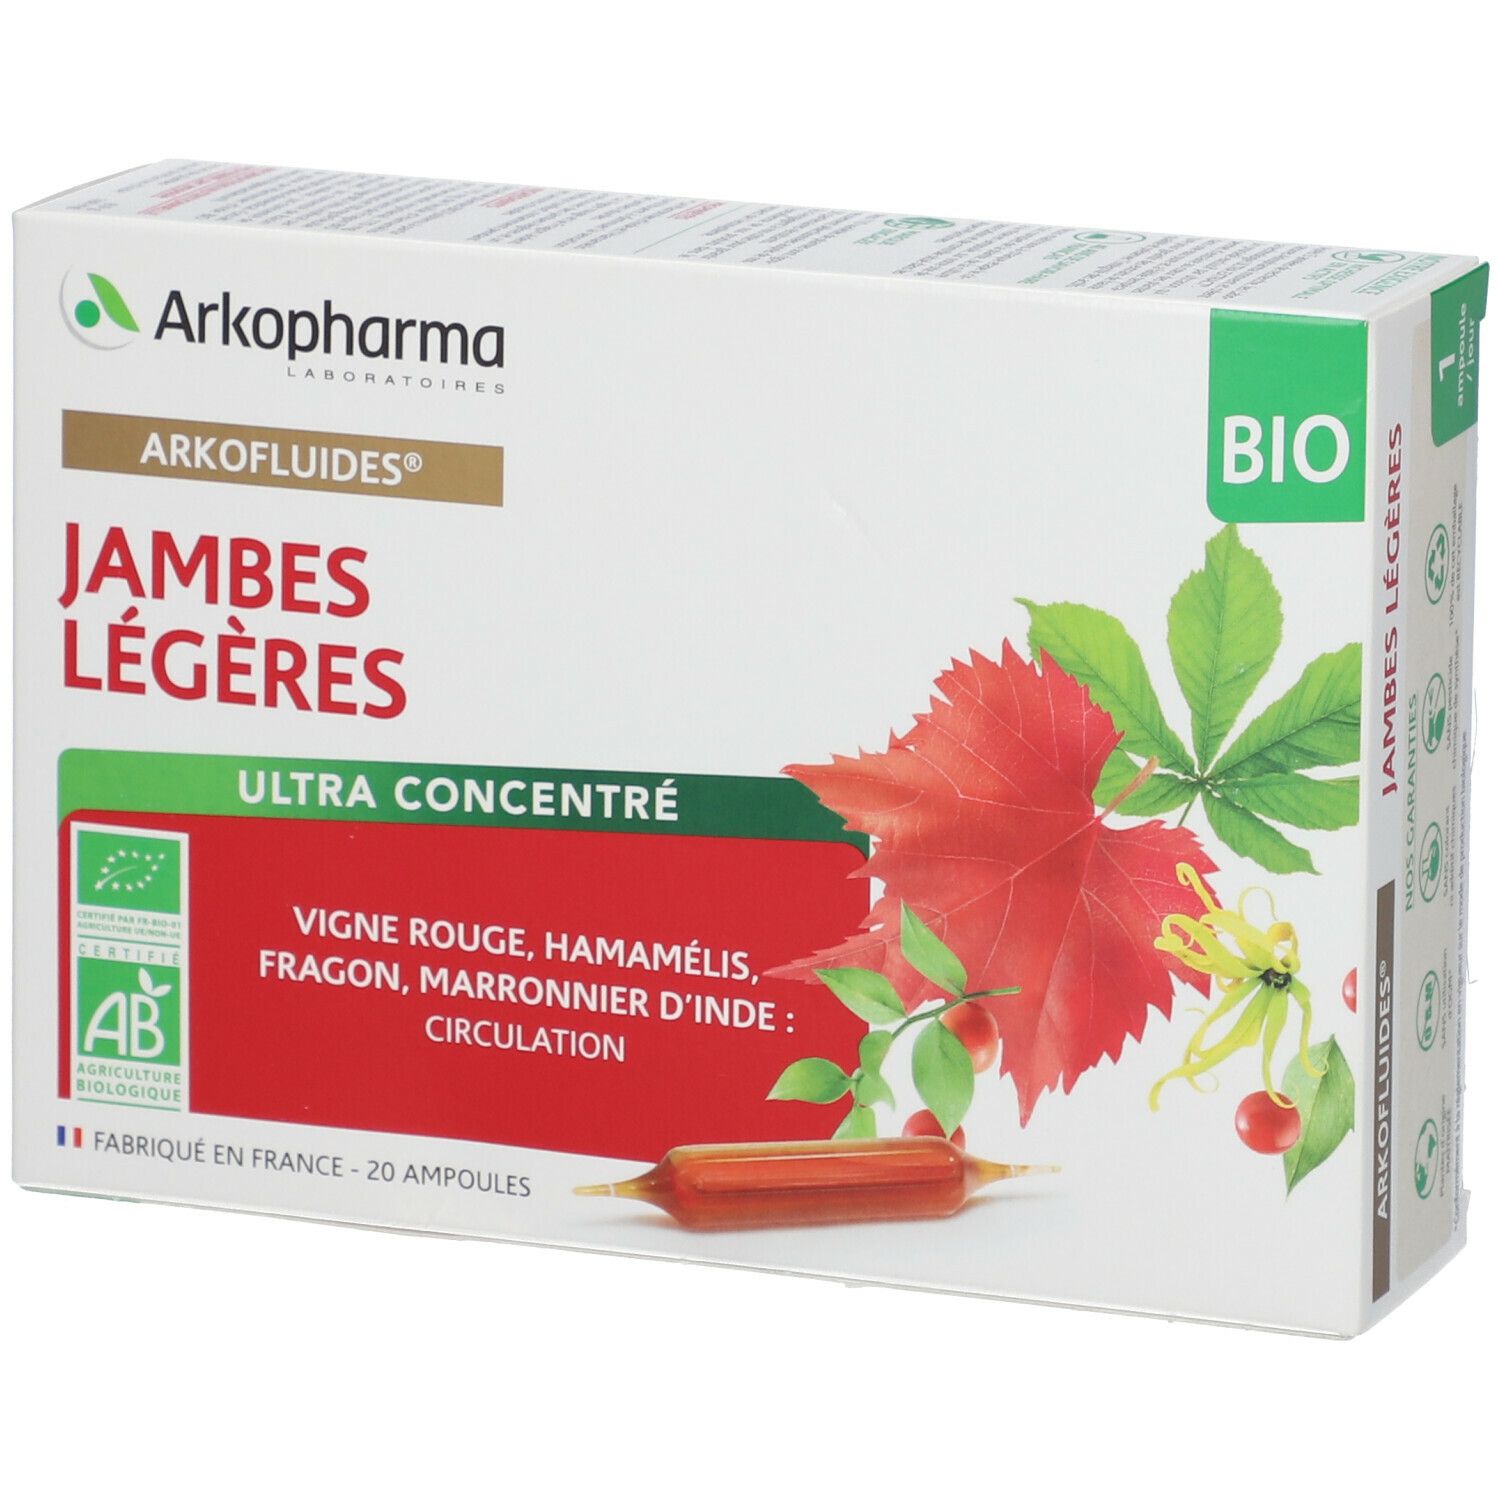 Arkopharma Arkofluides® Jambes légères Bio